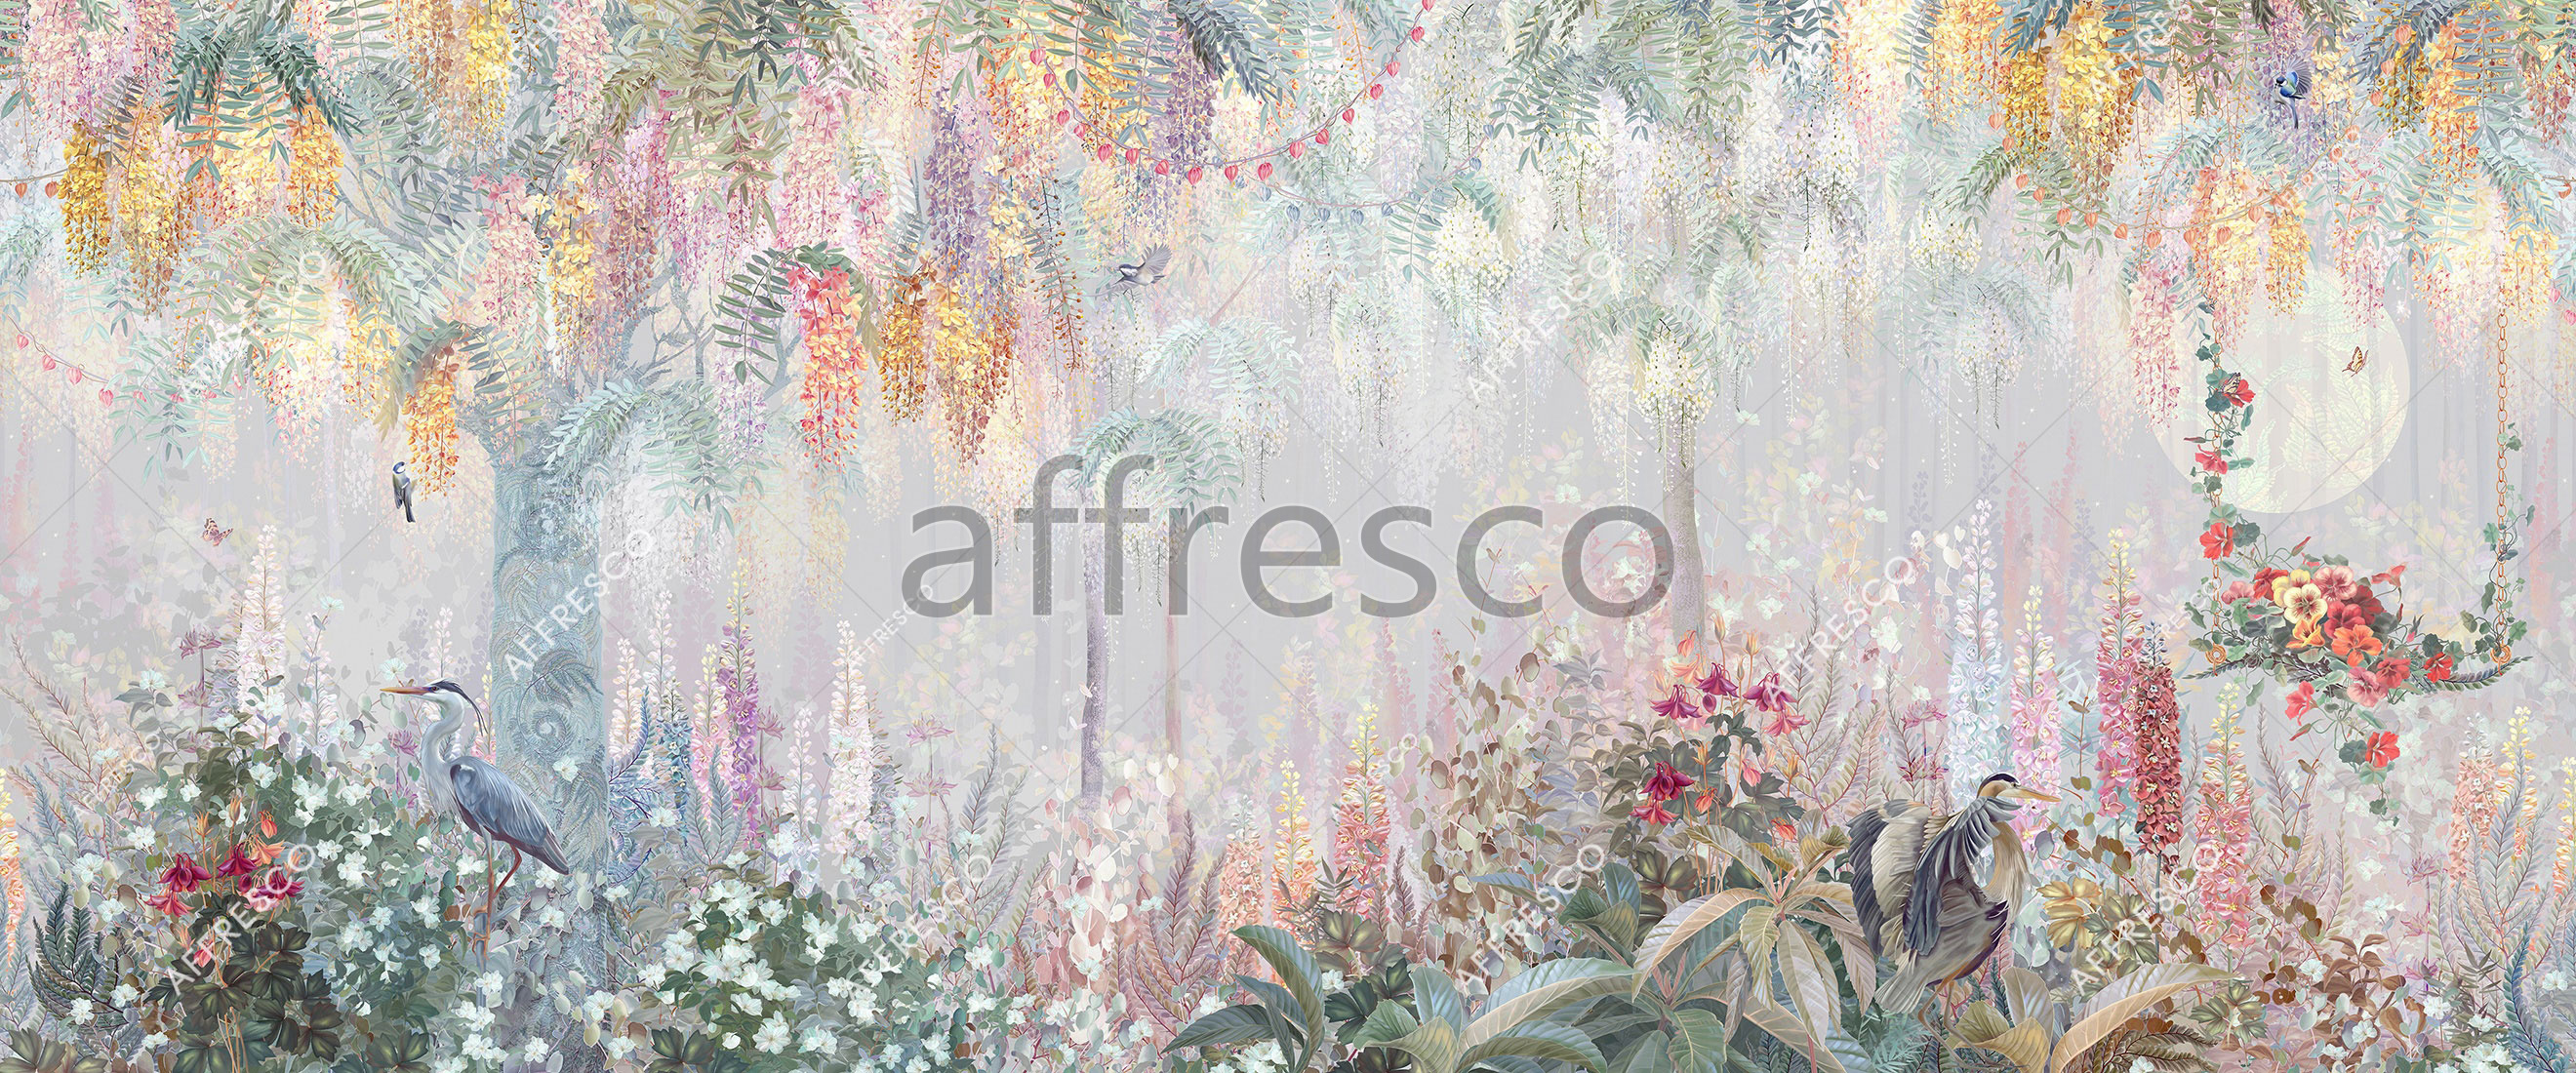 ID136004 | Forest |  | Affresco Factory